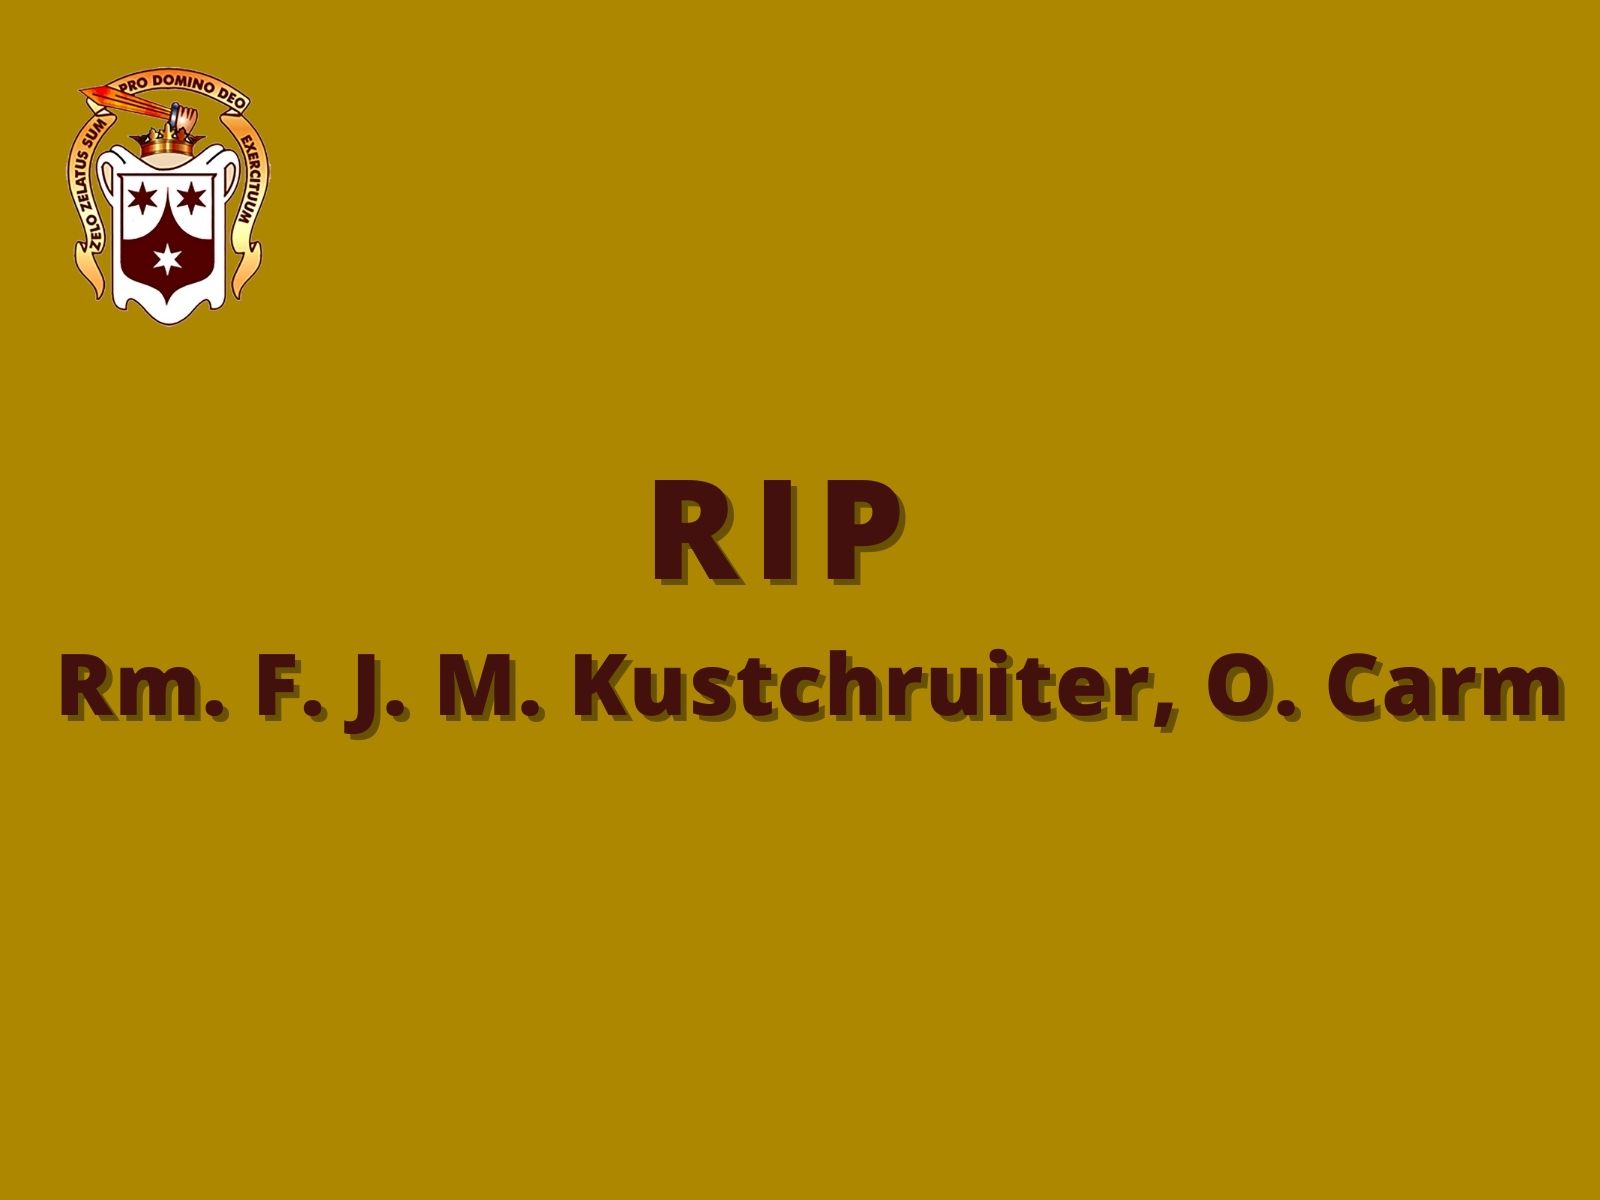 RIP: Rm. F. J. M. Kutschruiter, O. Carm.